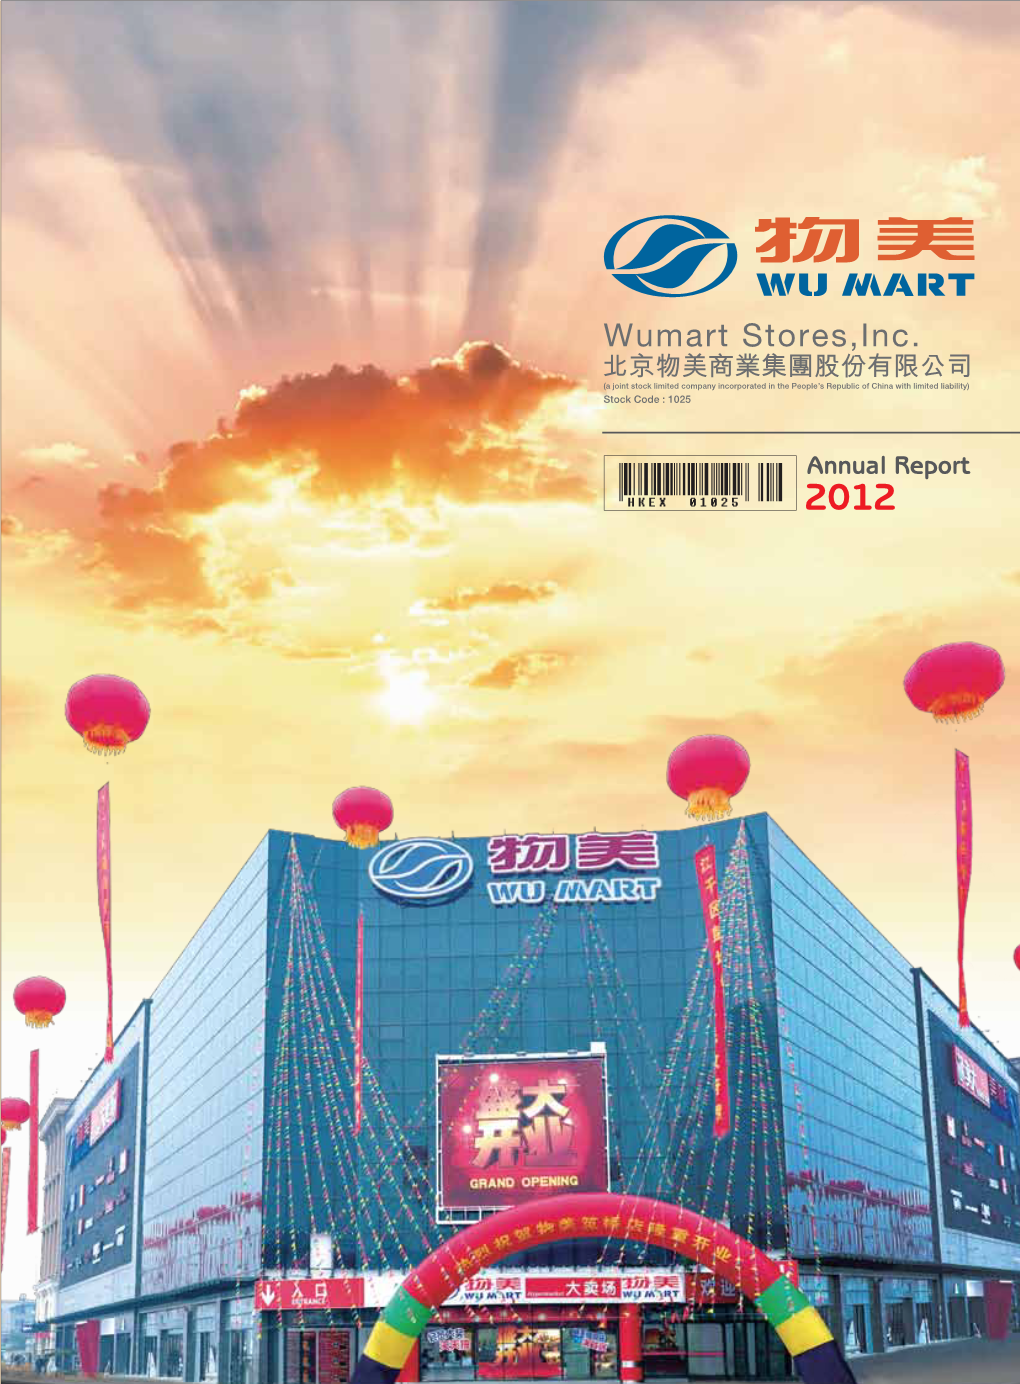 Annual Report HKEX 01025 2012 HKEX 01025 2012 Annual Report 2012 年報 Corporate Vision